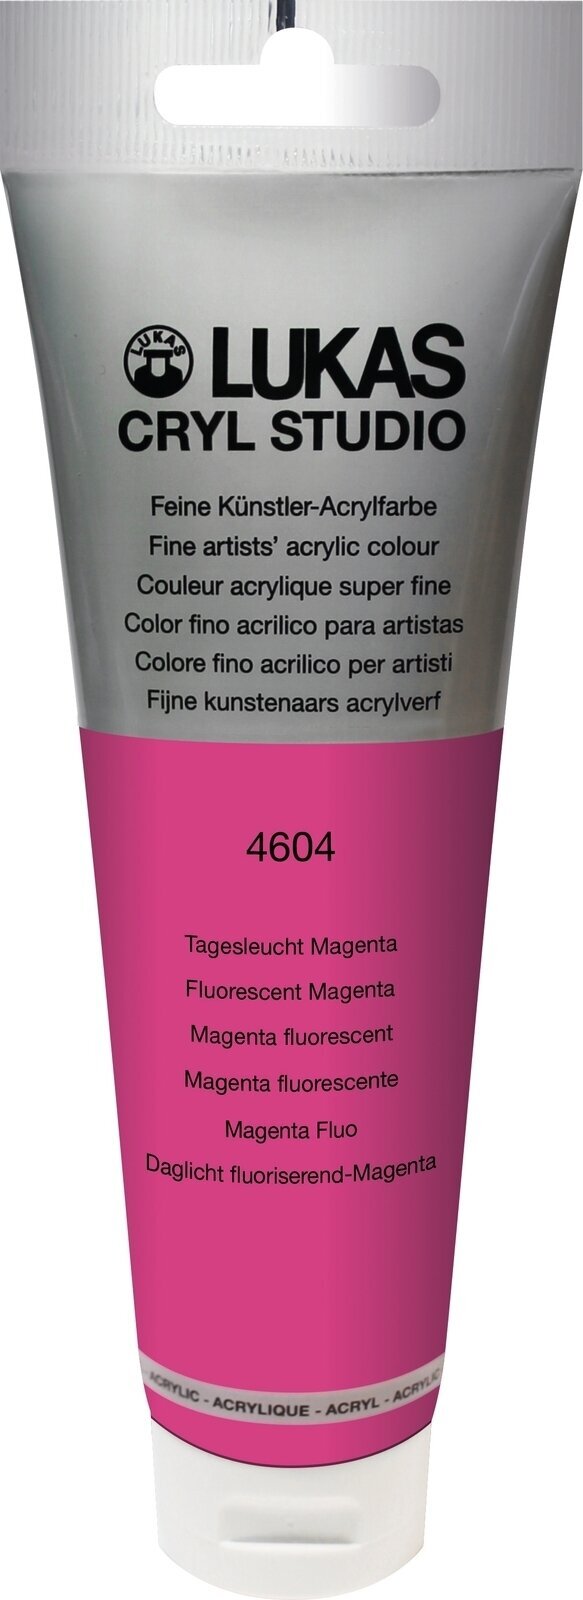 Acrylfarbe Lukas Cryl Studio Acrylfarbe 125 ml Fluorescent Magenta